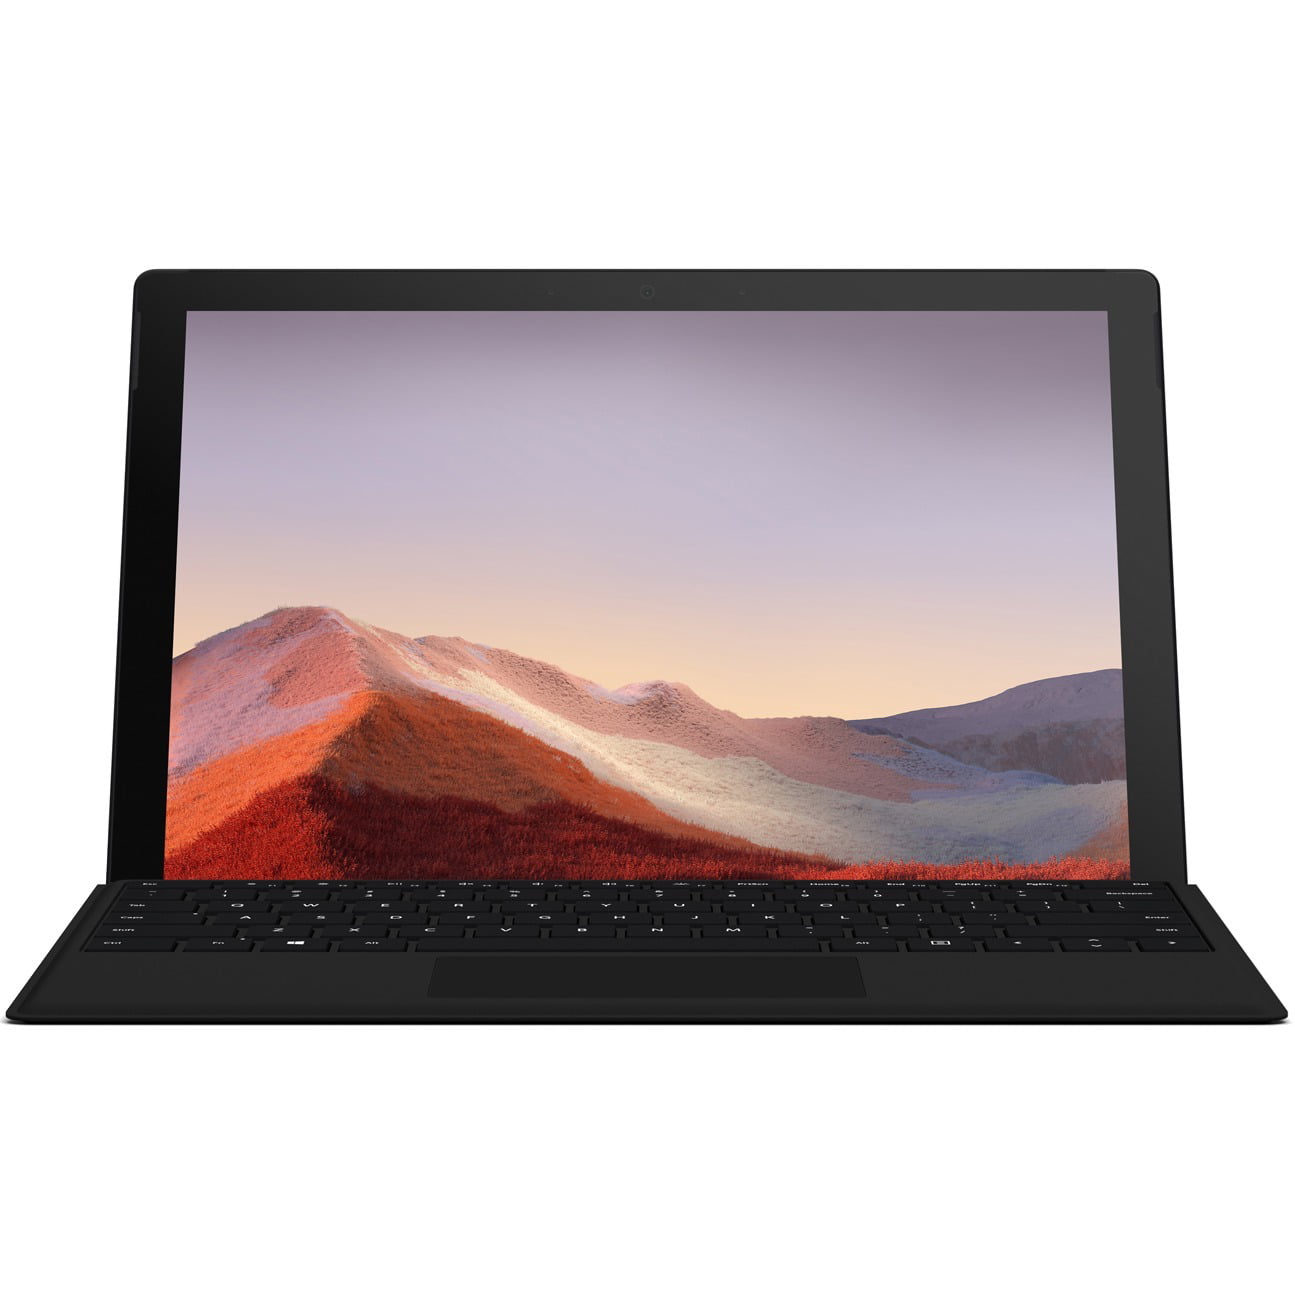 Defecte Afgekeurd Ademen Microsoft Surface Pro 7, 12.3" Touch-Screen, Intel Core i7, 16GB Memory,  256GB Solid State Drive, Matte Black, VNX-00016 - Walmart.com